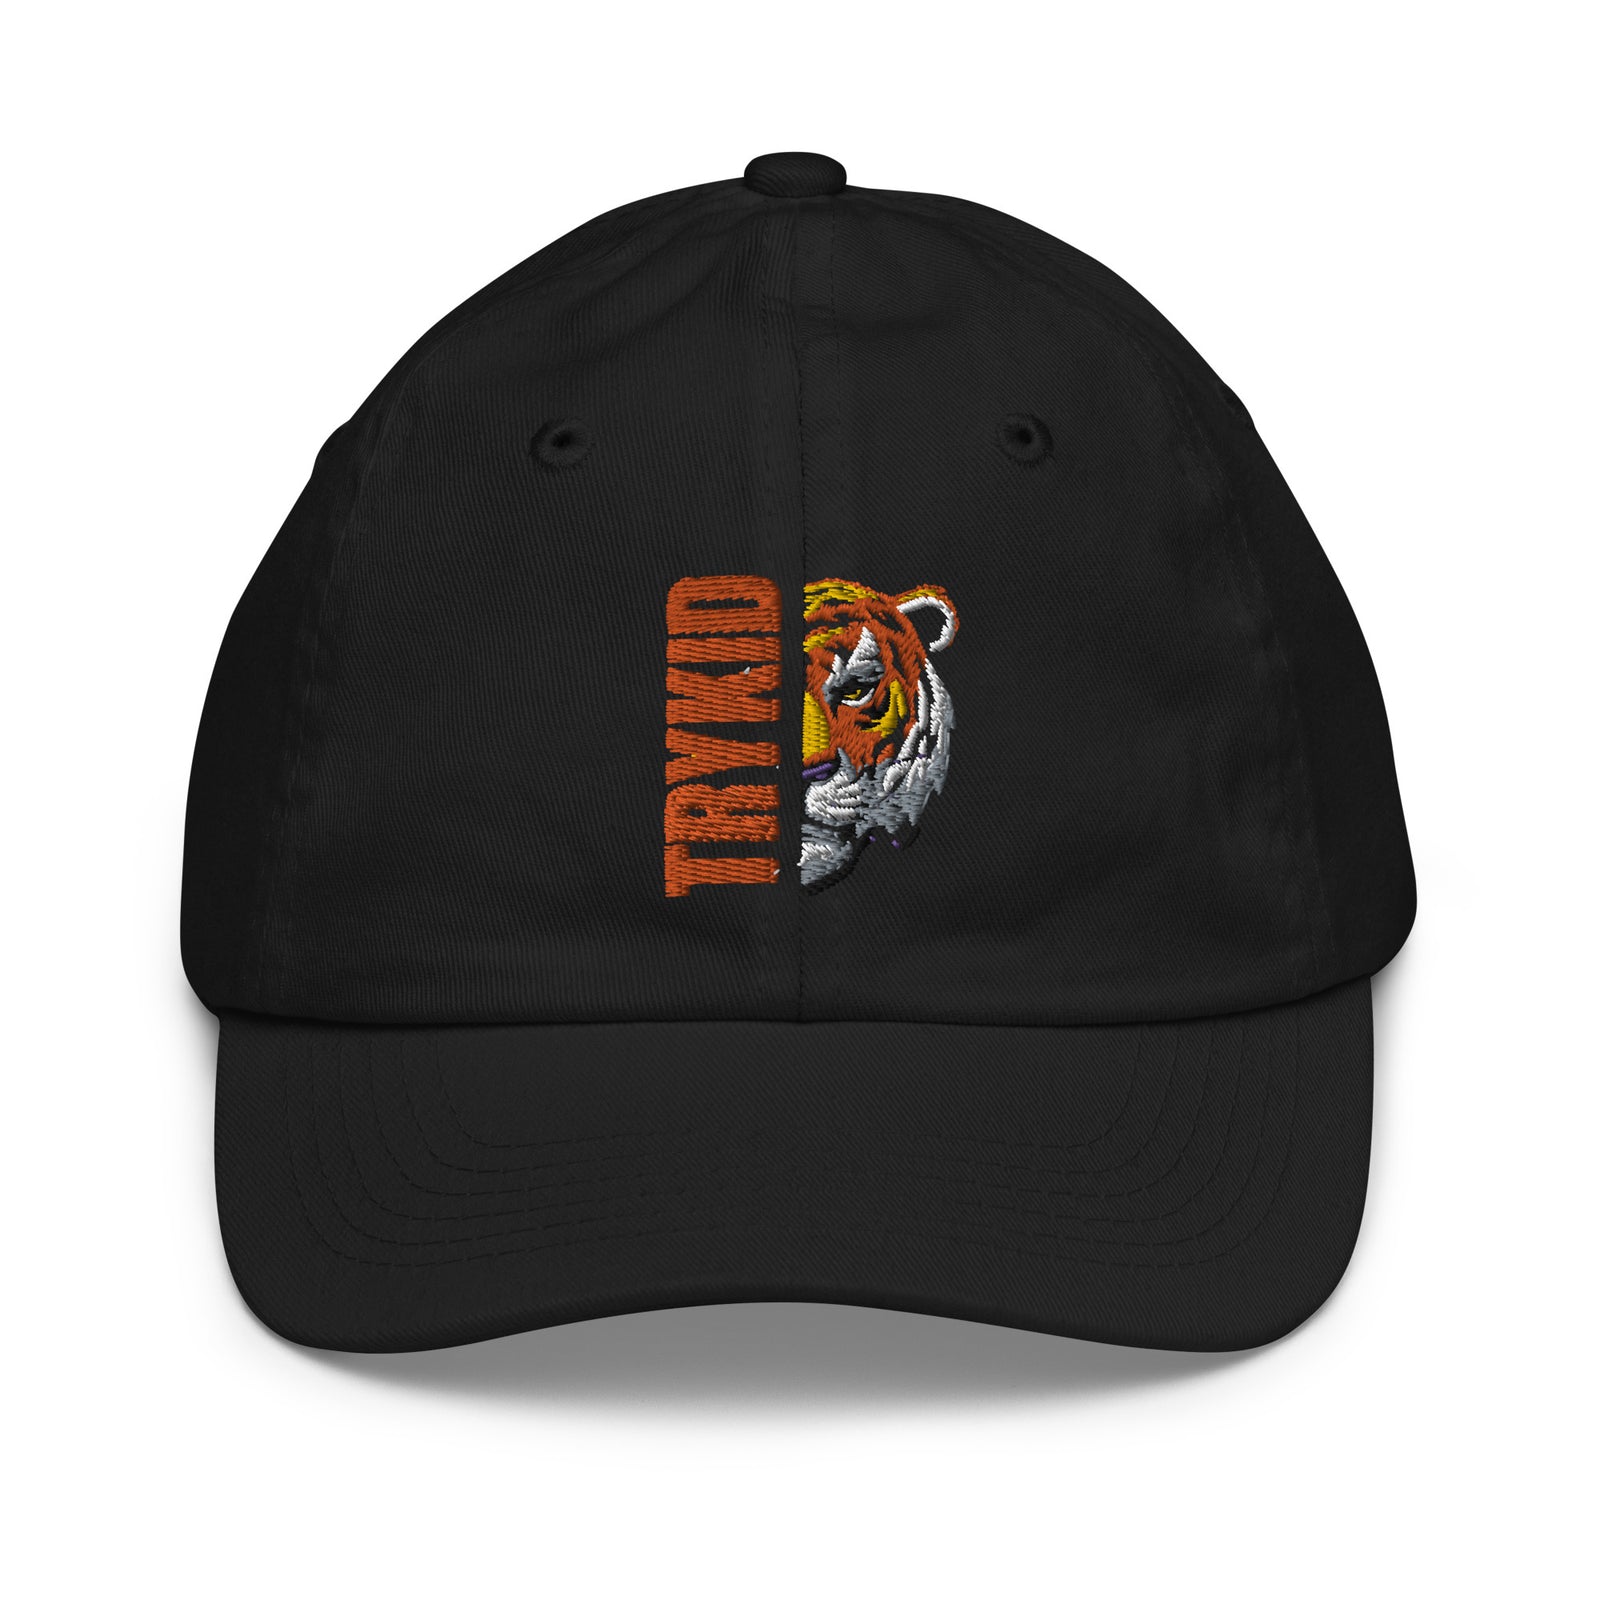 Youth baseball cap - TryKid